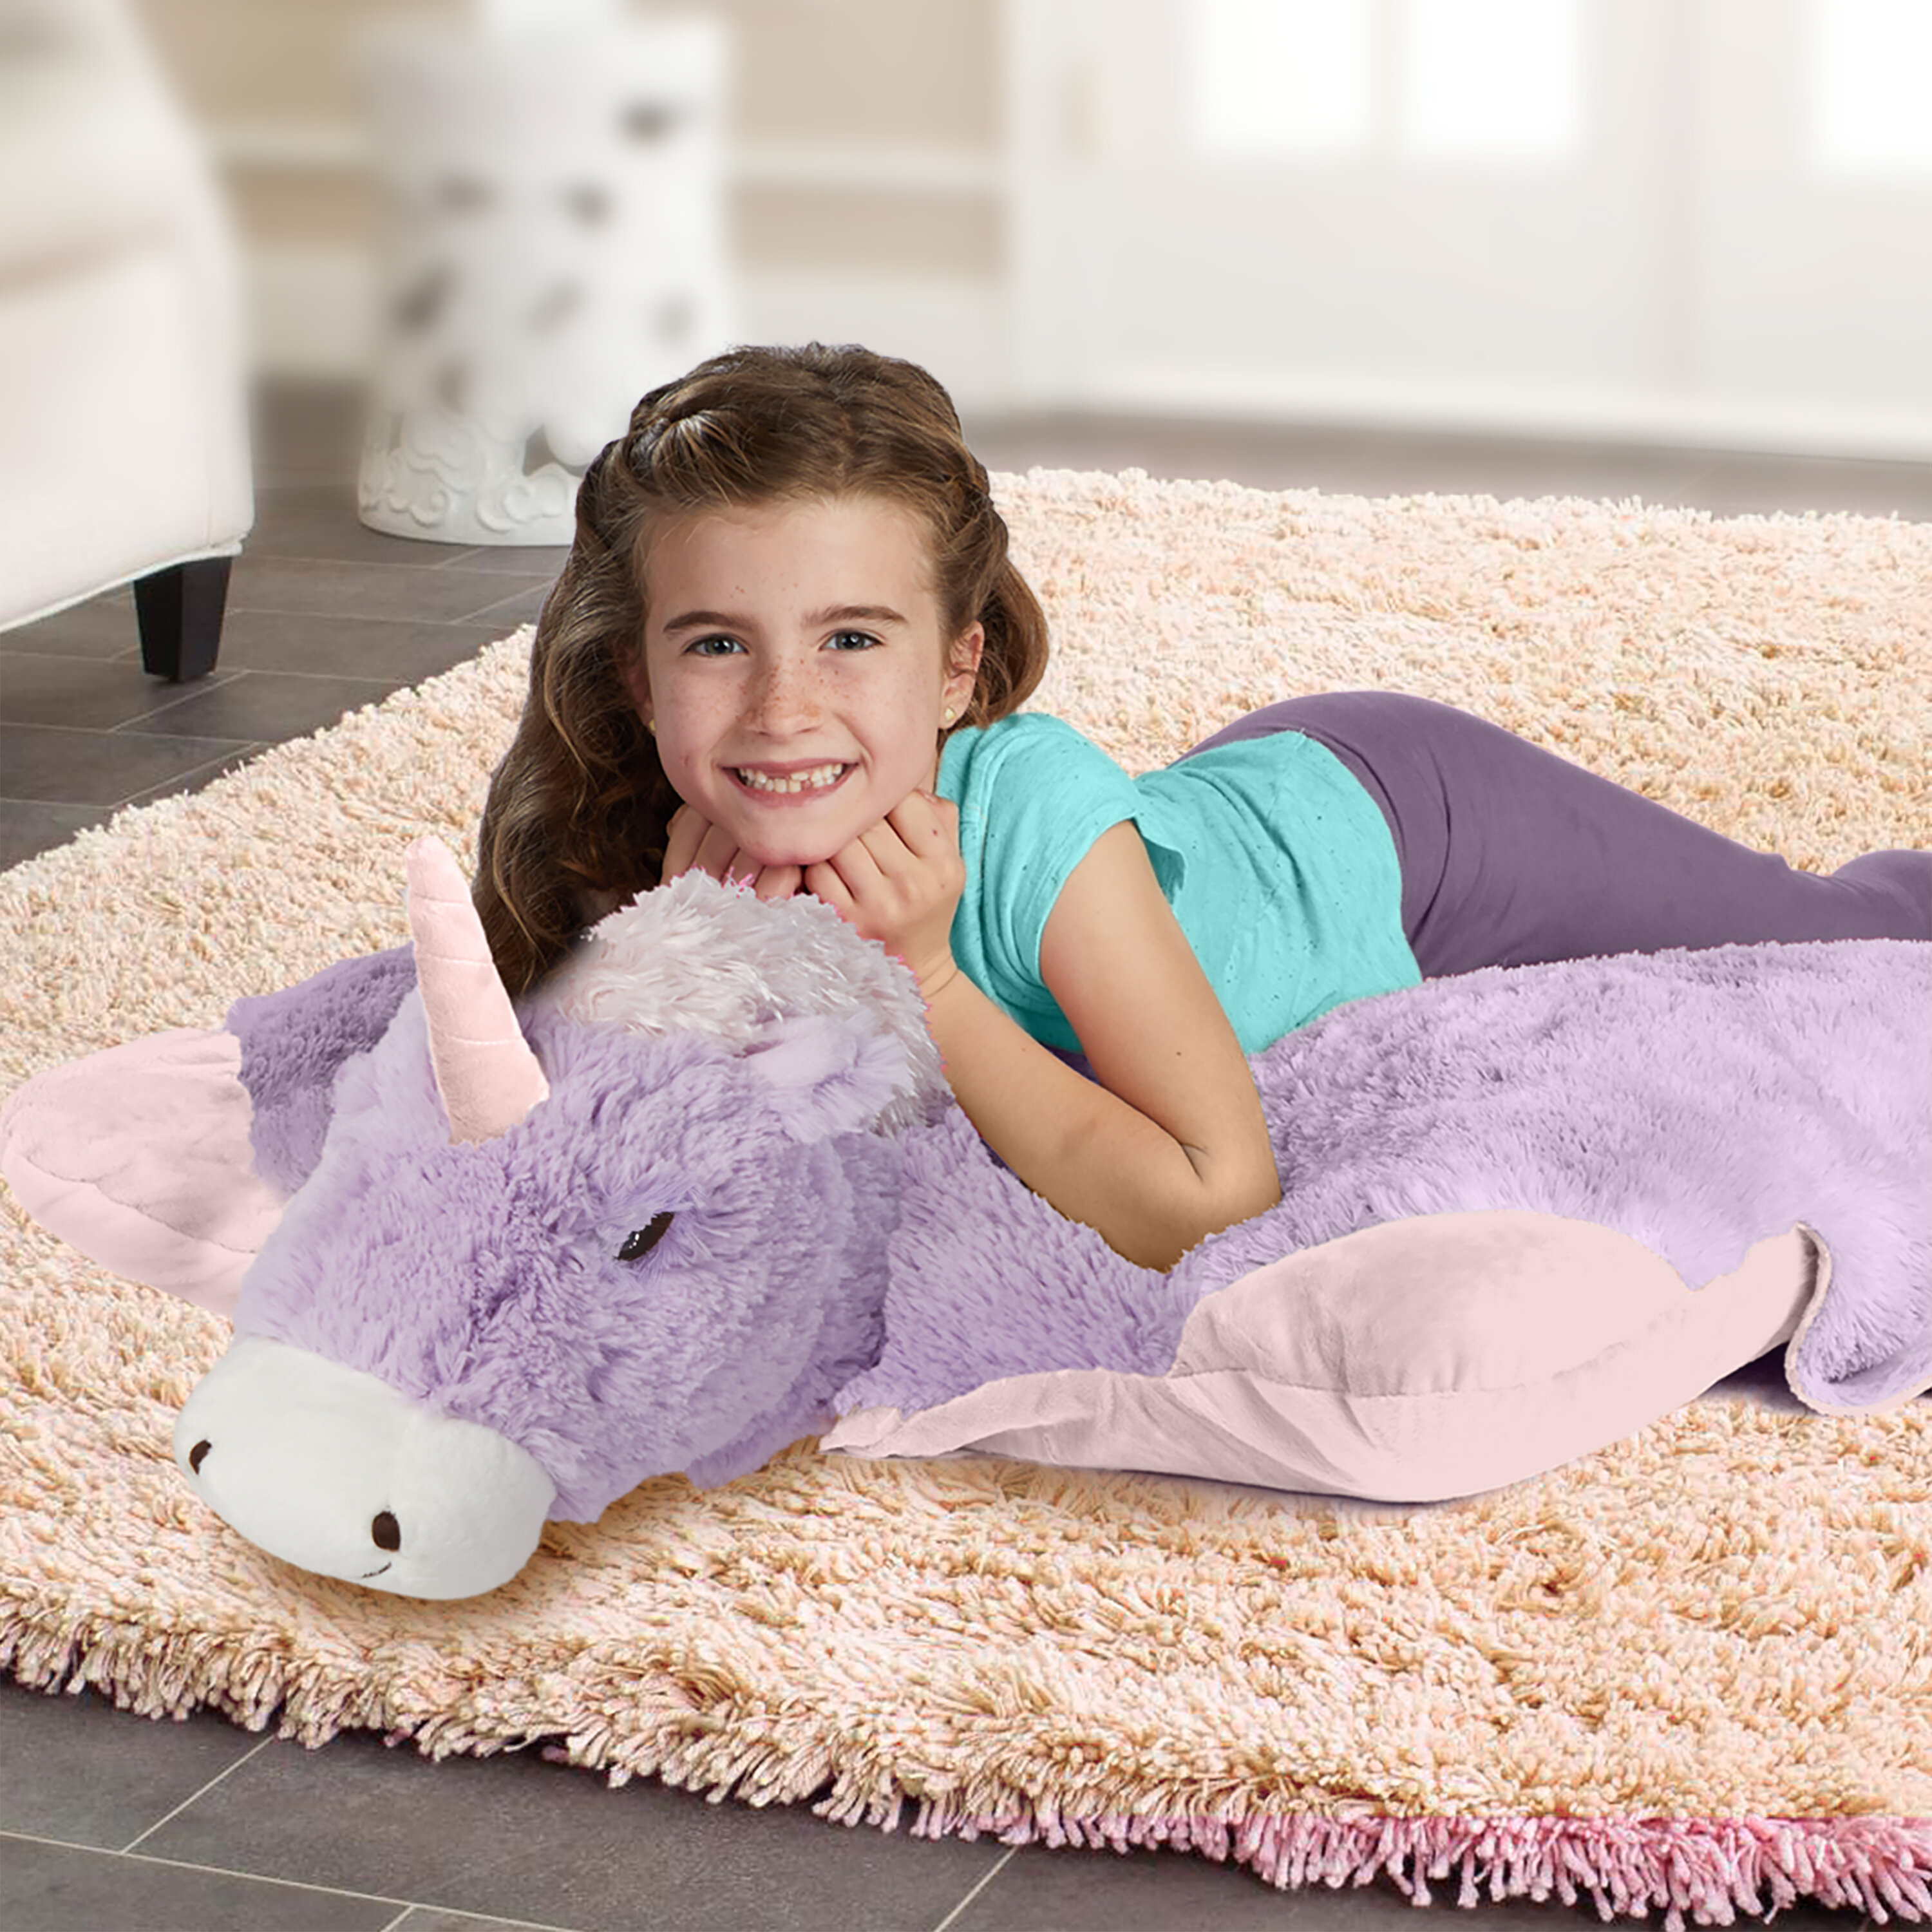 magical unicorn pillow